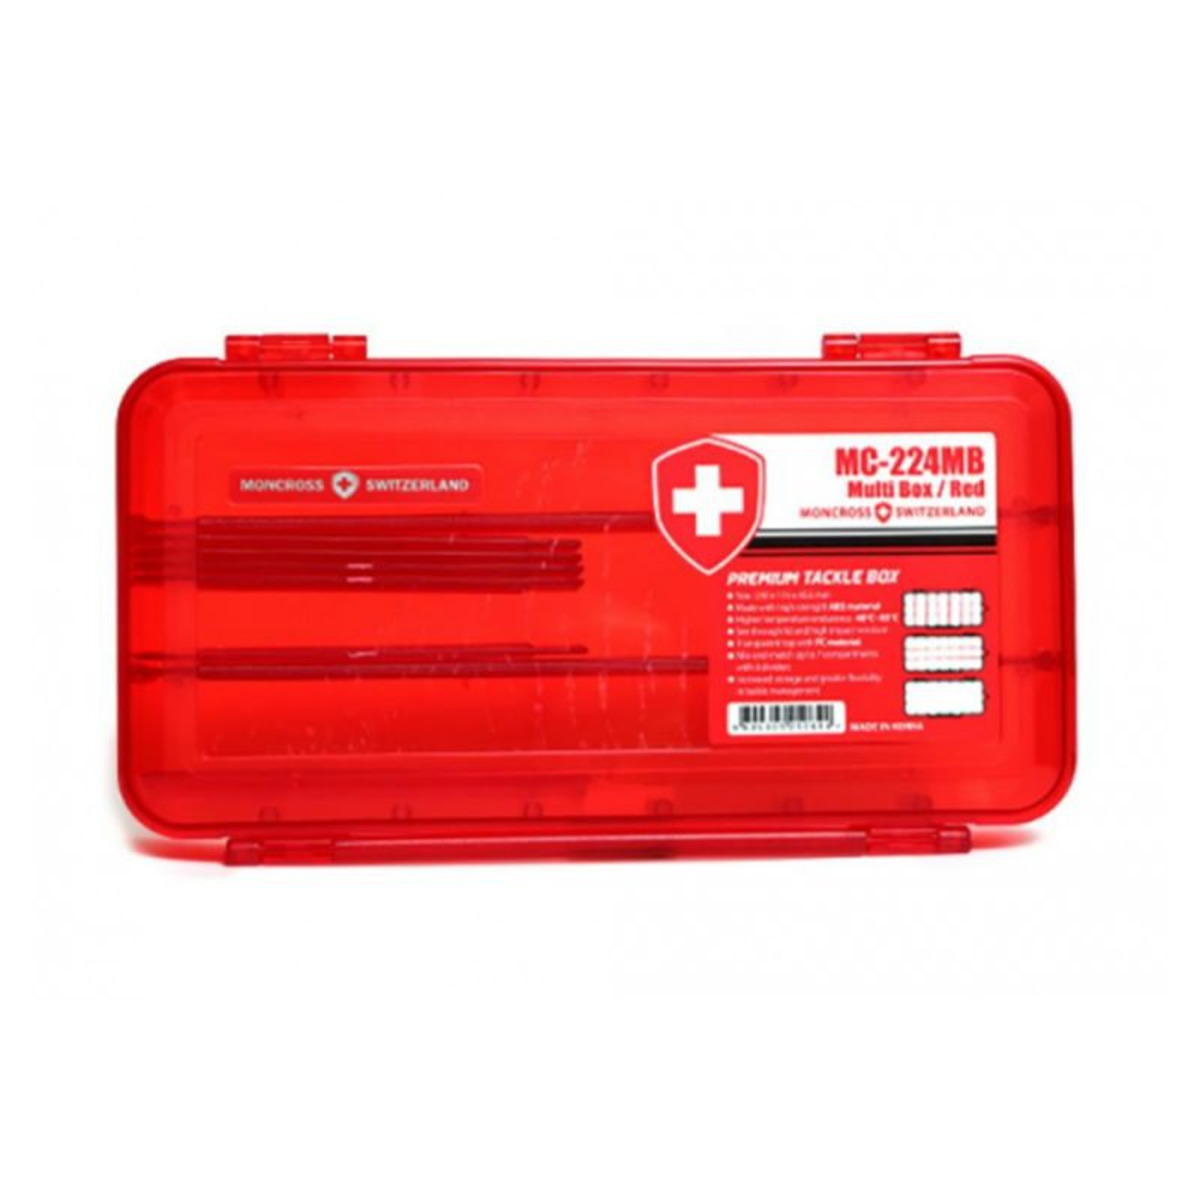 Moncross Switzerland Tackle Box Mc 224 Mb - Red